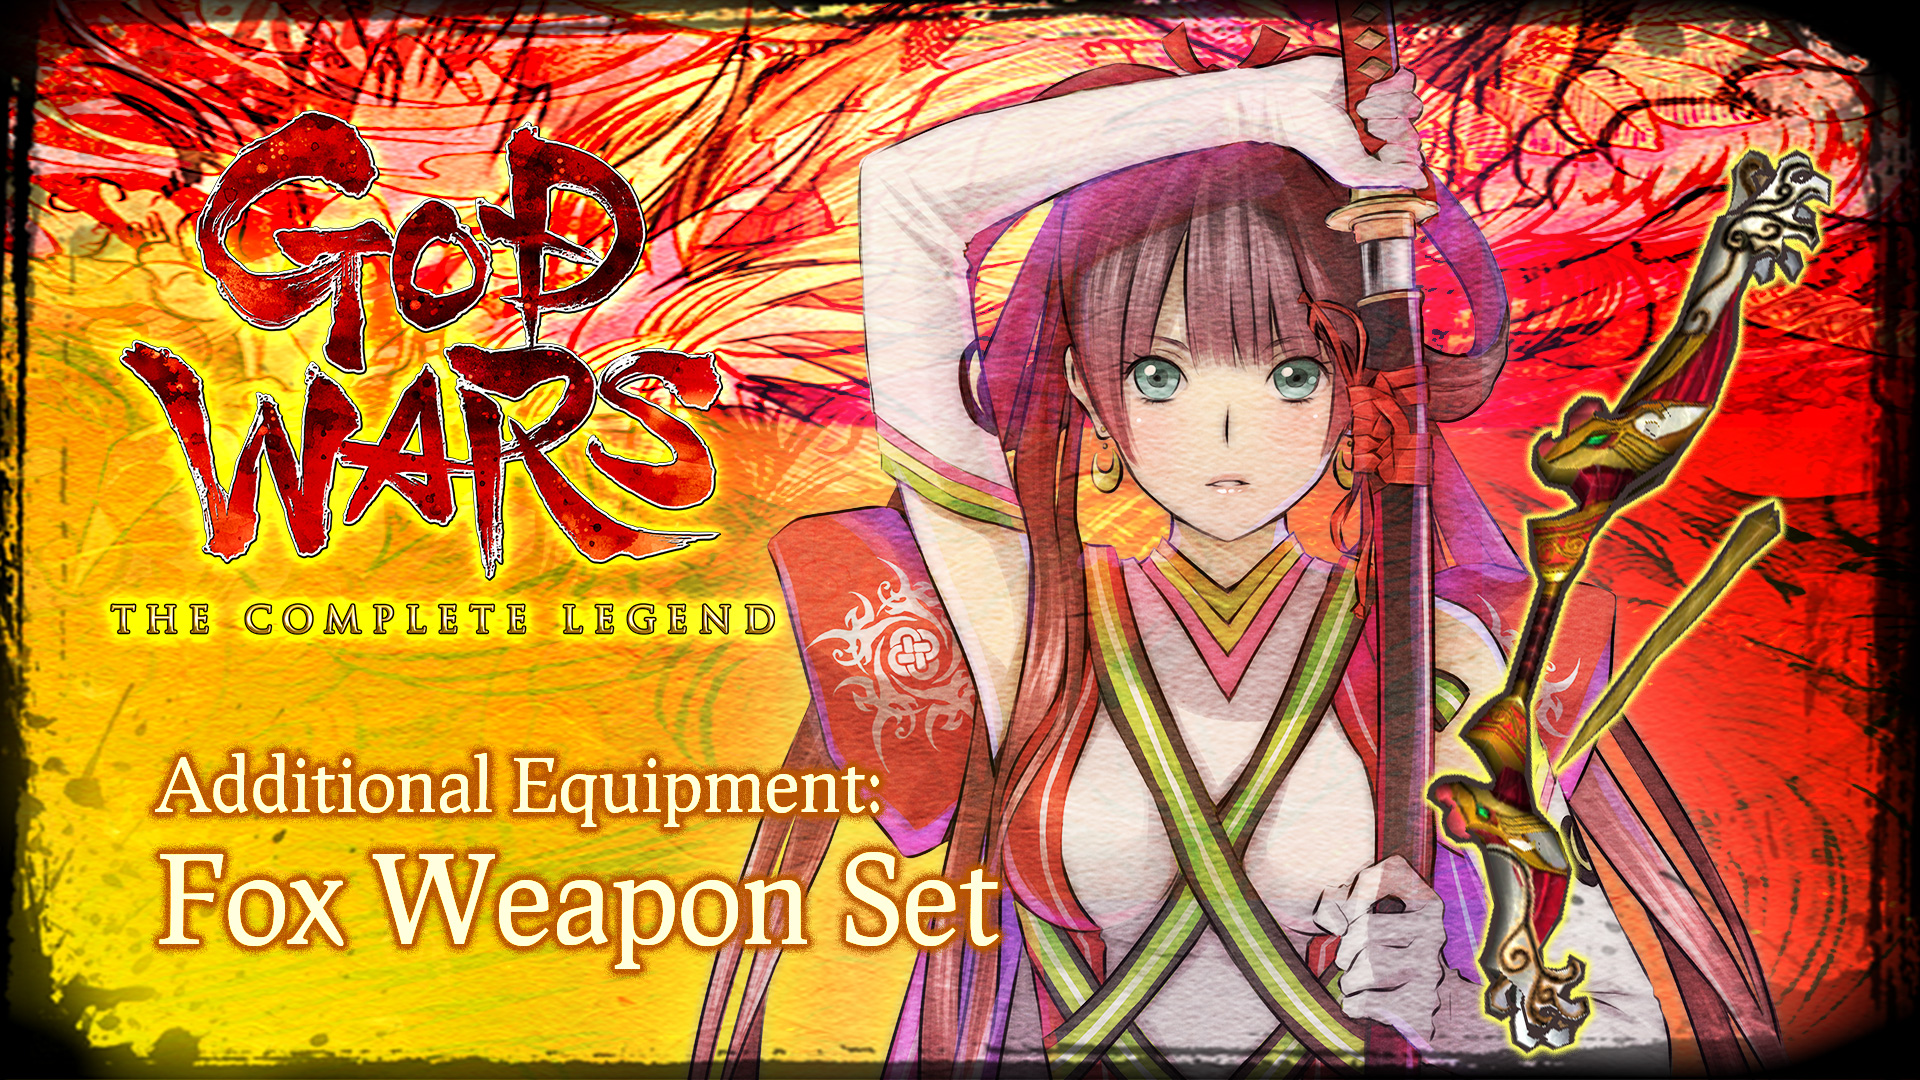 Additional Equipment: Fox Weapon Set